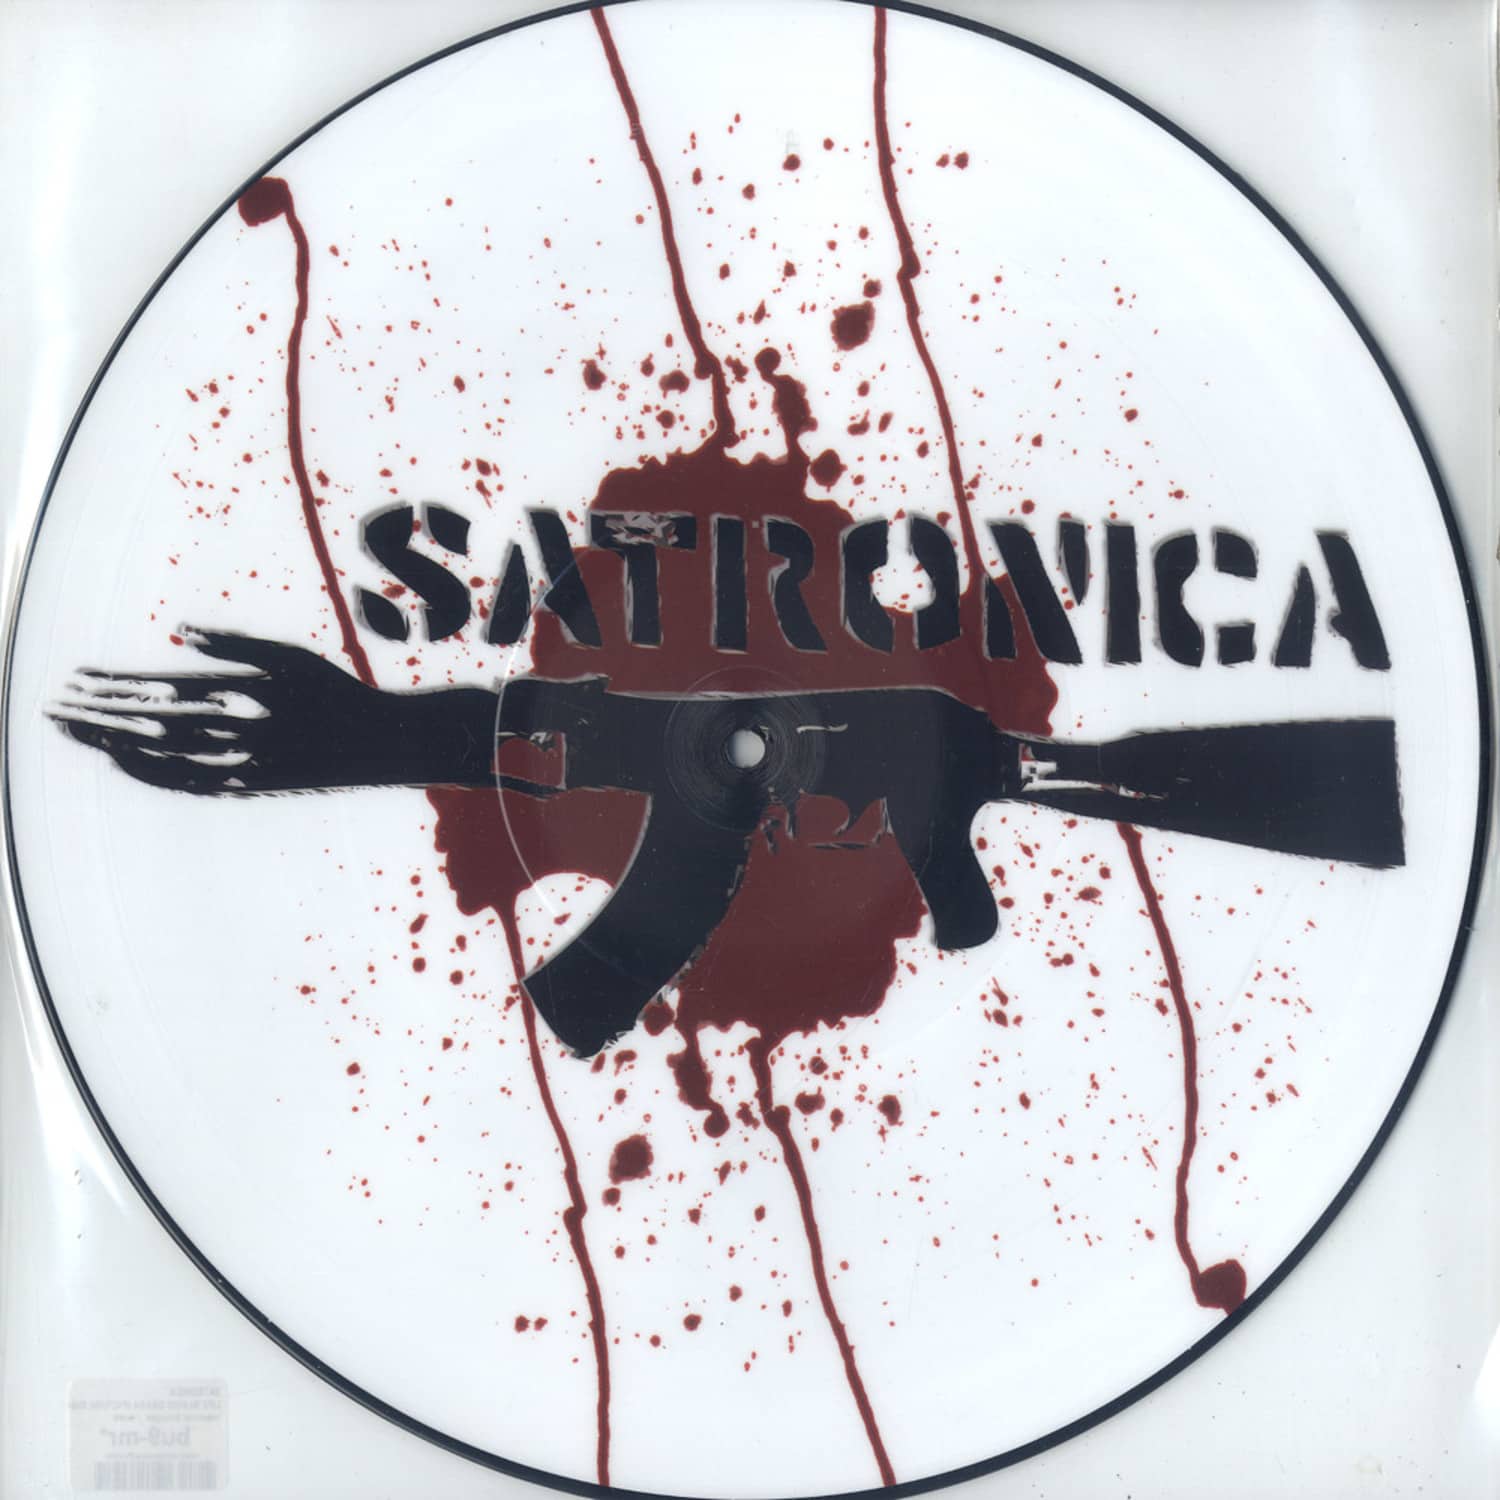 Satronica - LIFE BLOOD DEATH 